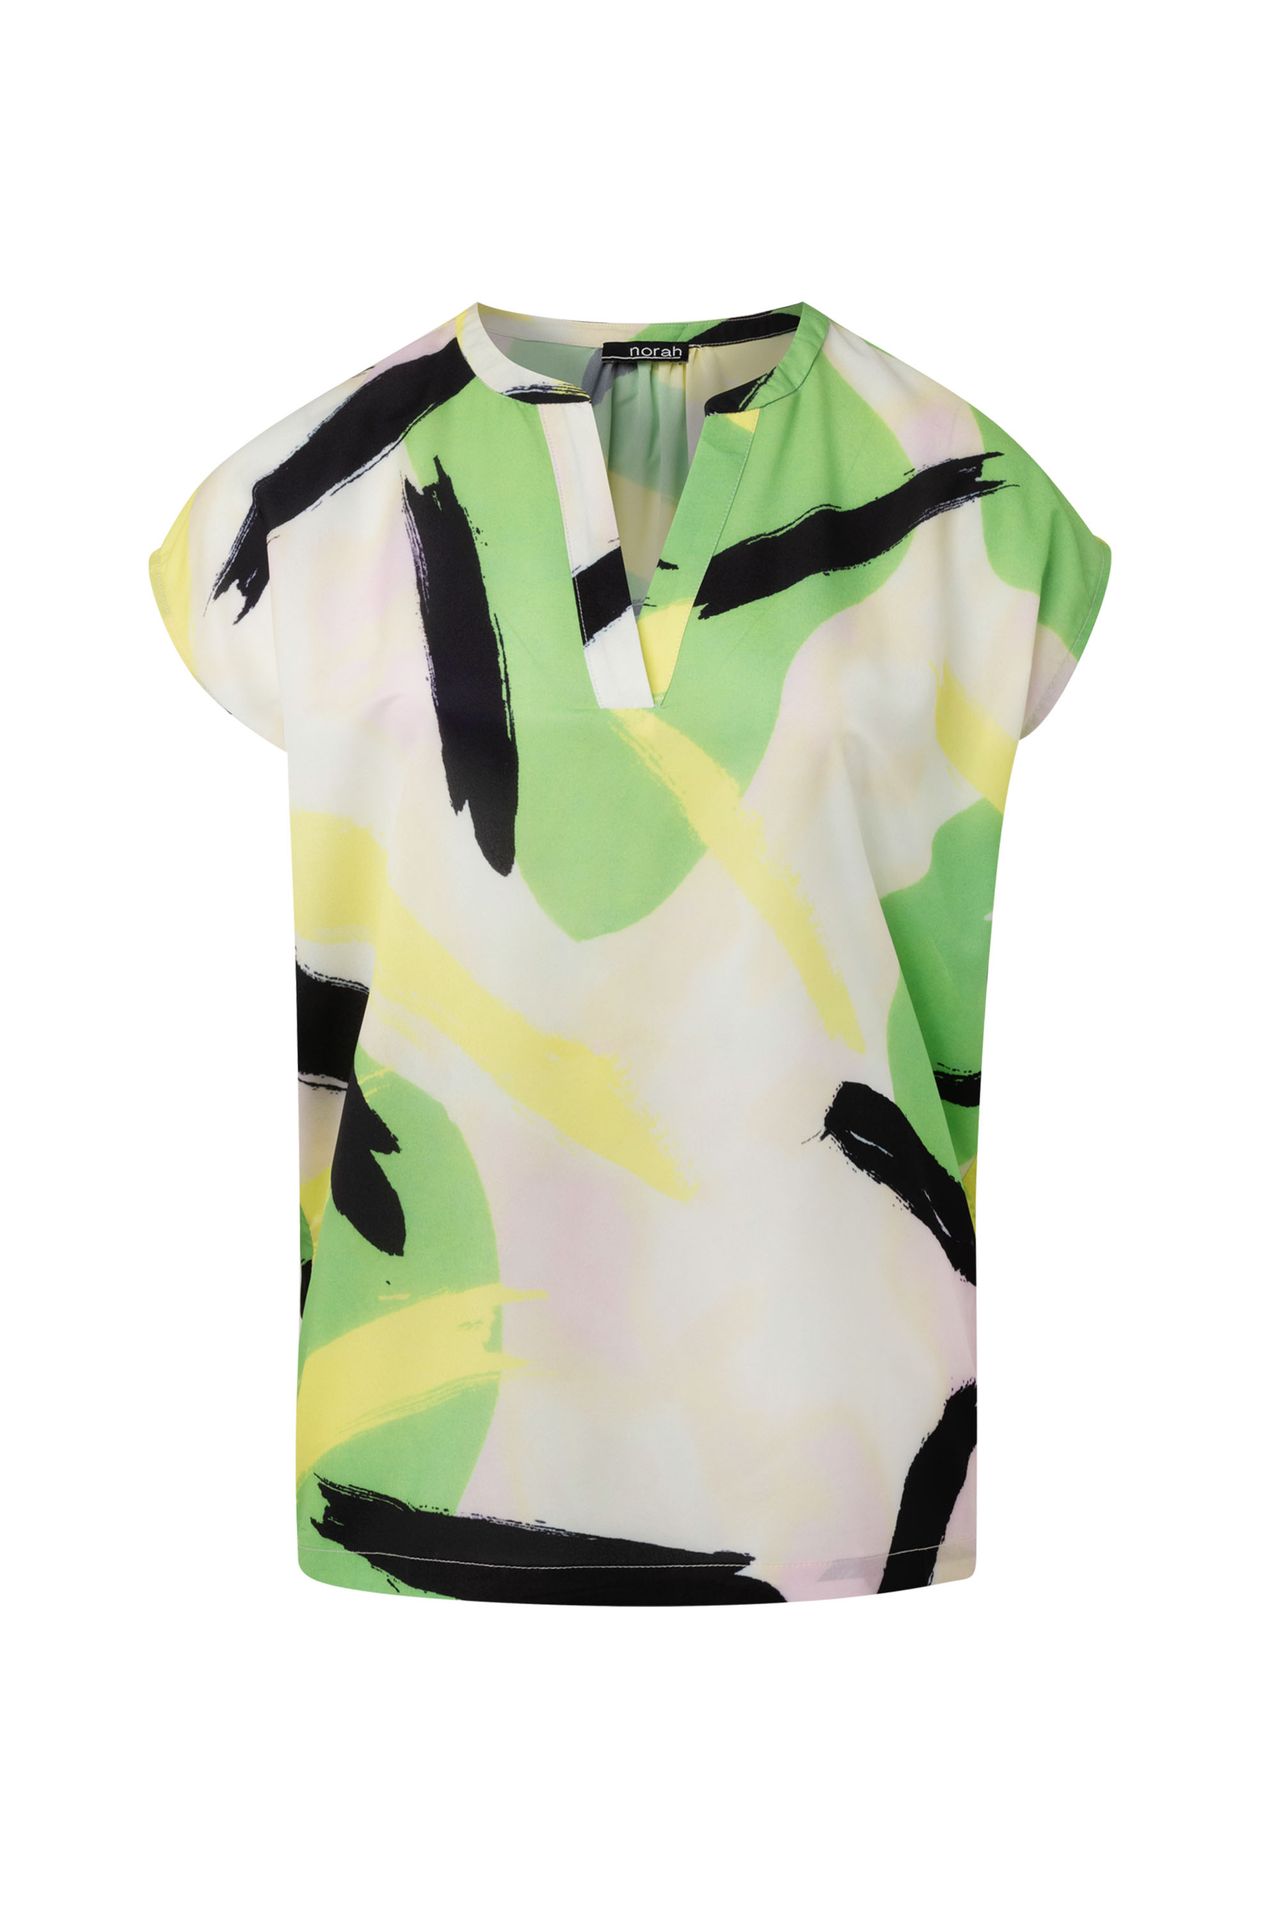 Norah Groene blouse lime multicolor 214468-501